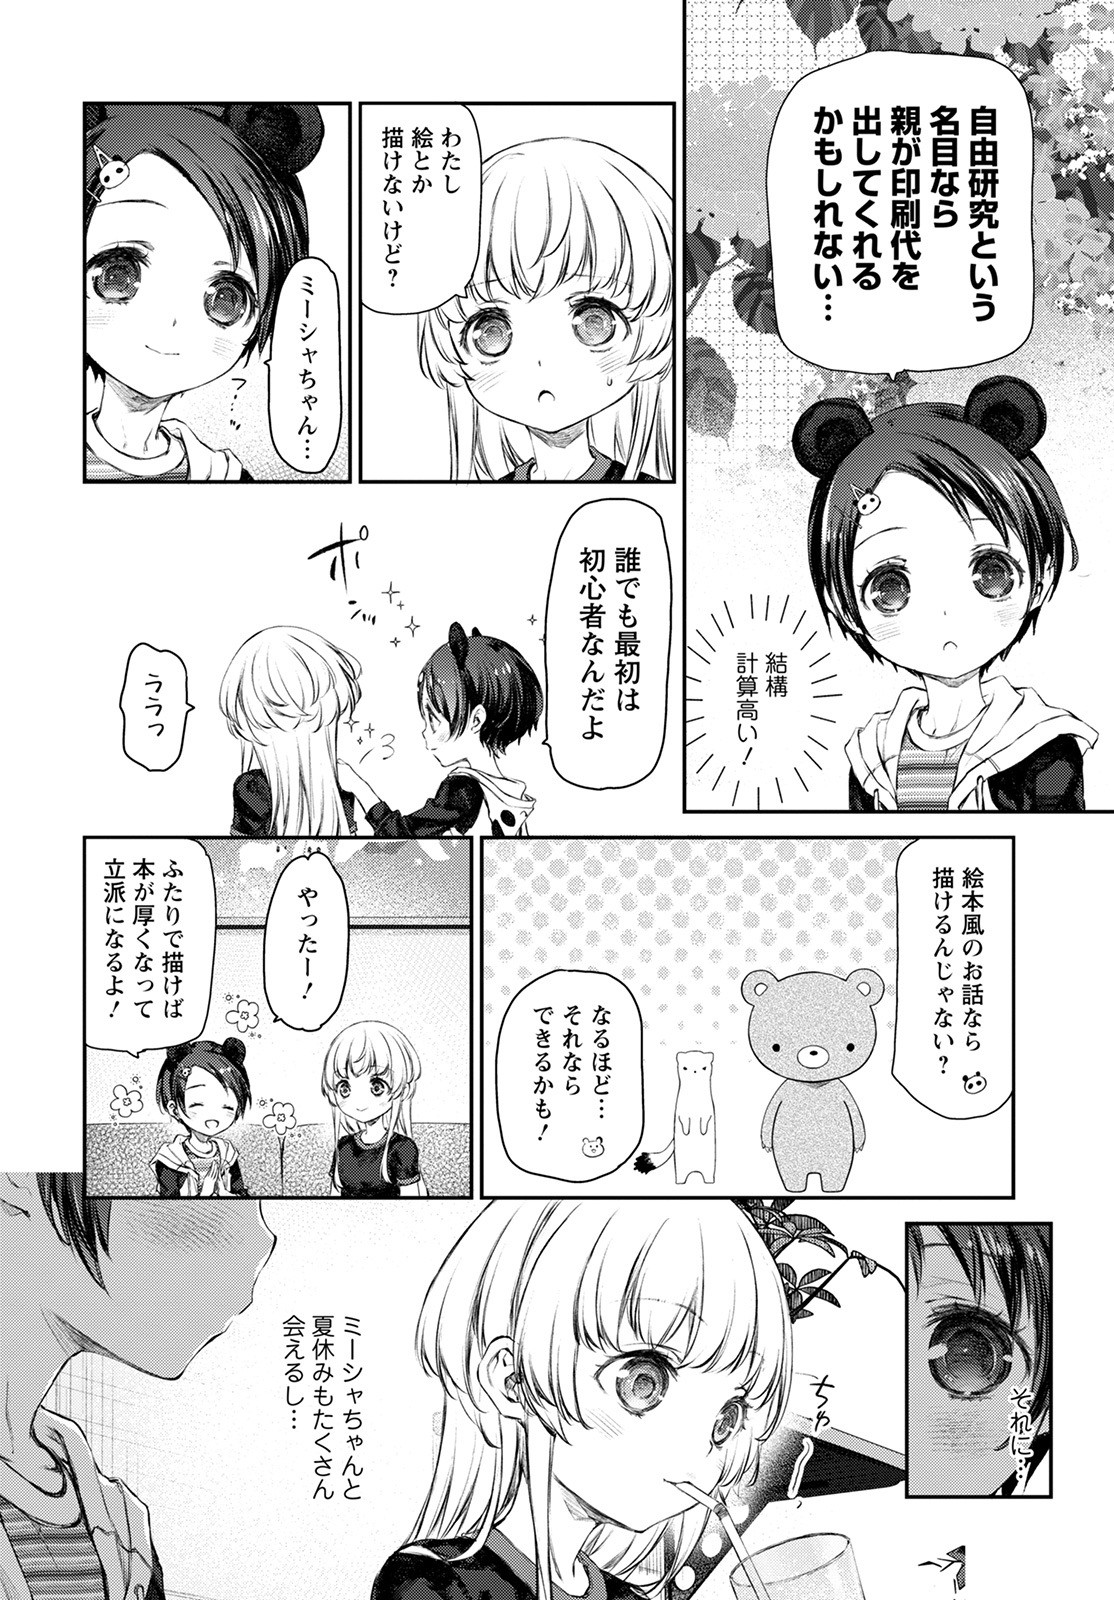 Uchi no Maid ga Uzasugiru! - Chapter 52 - Page 8